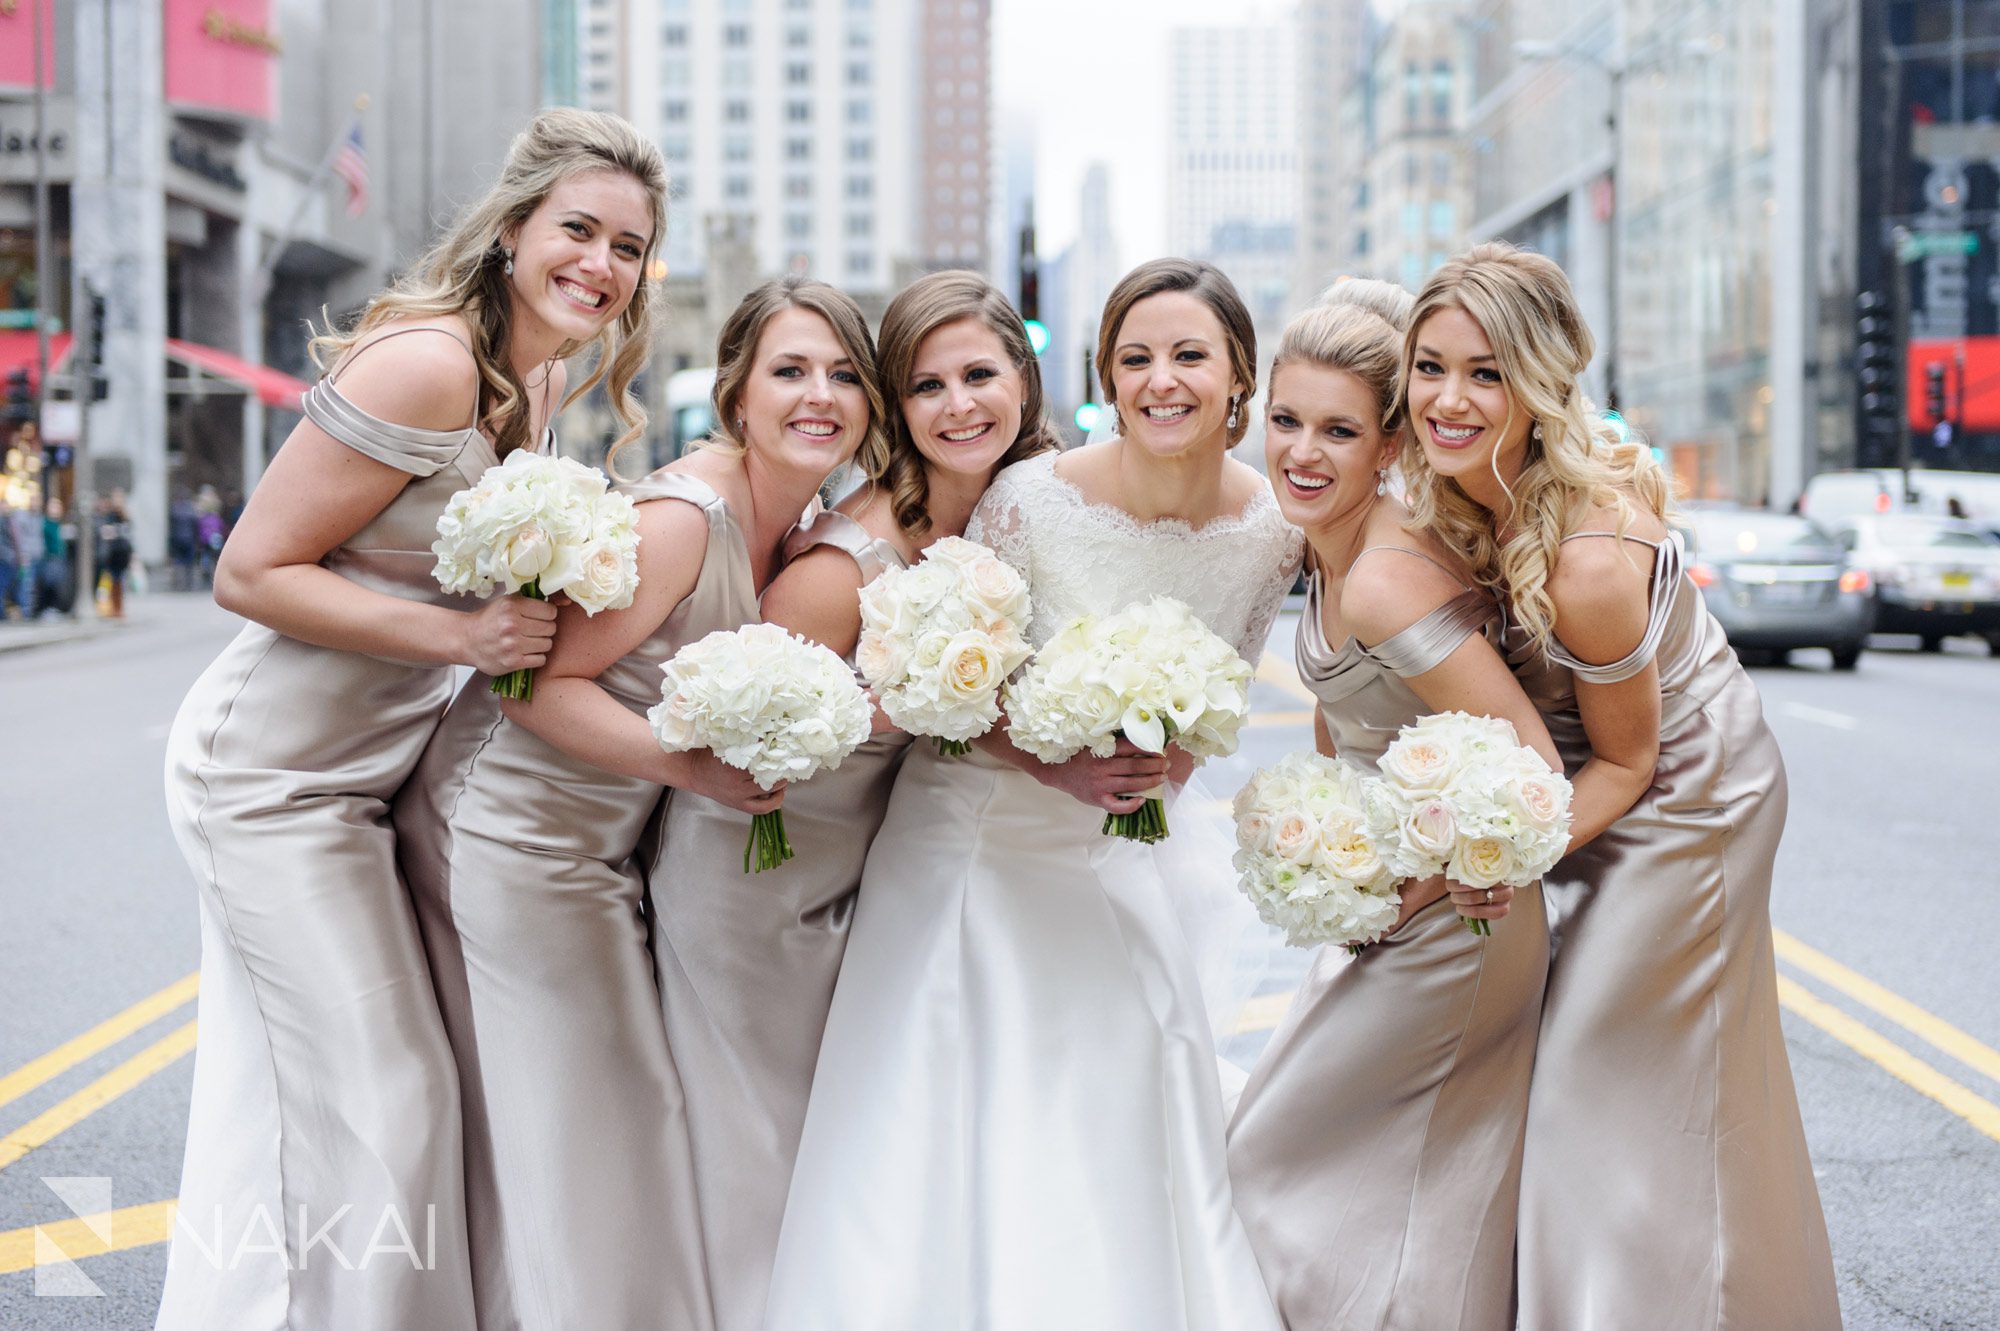 Michigan avenue wedding photographer Chicago luxury bridal party